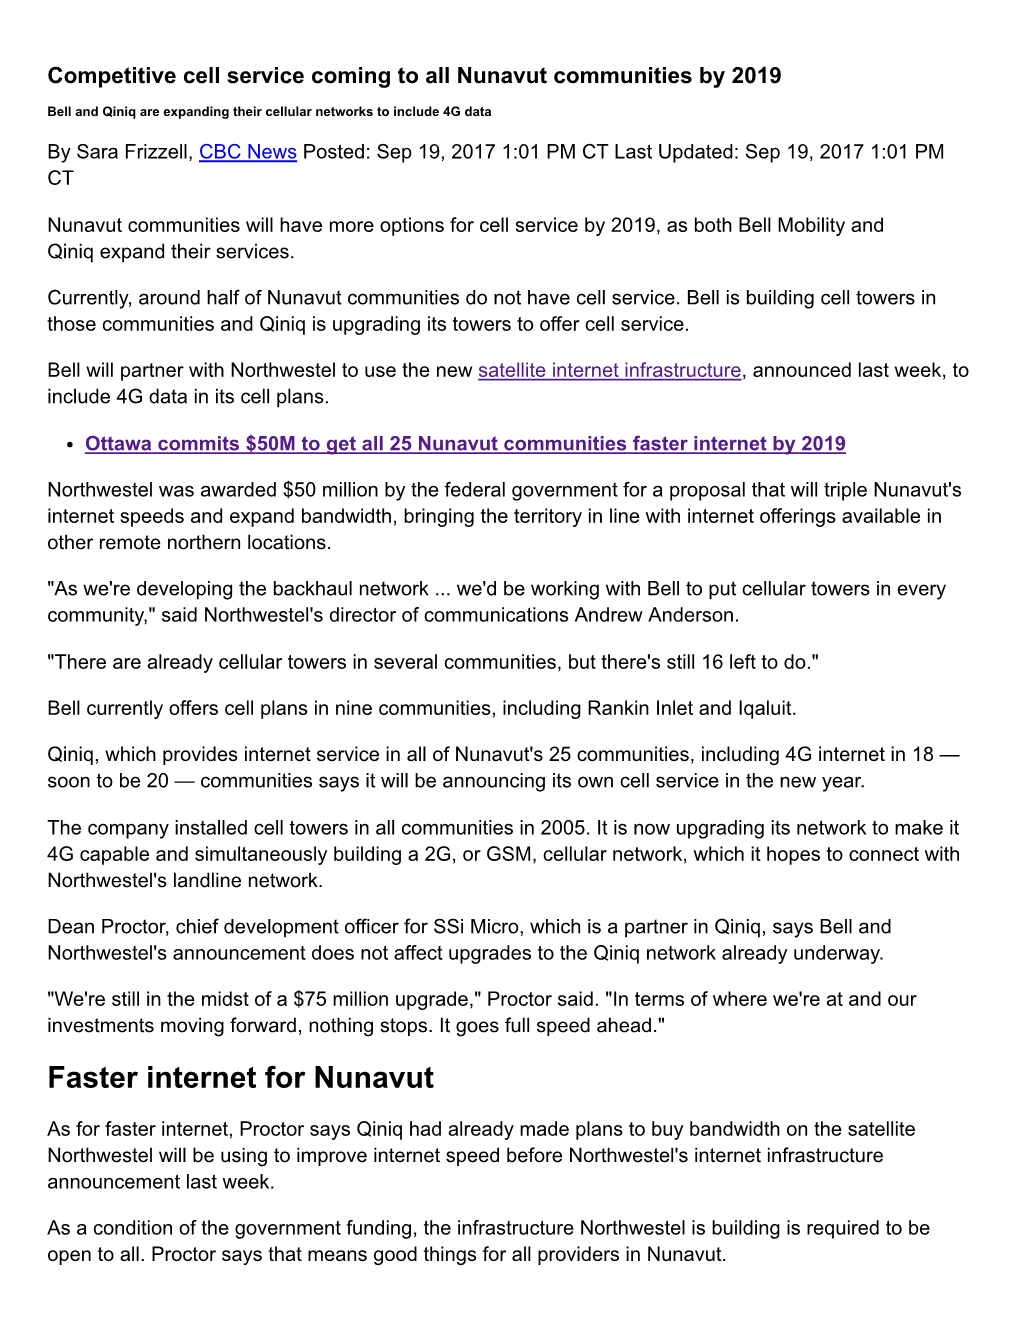 Faster Internet for Nunavut